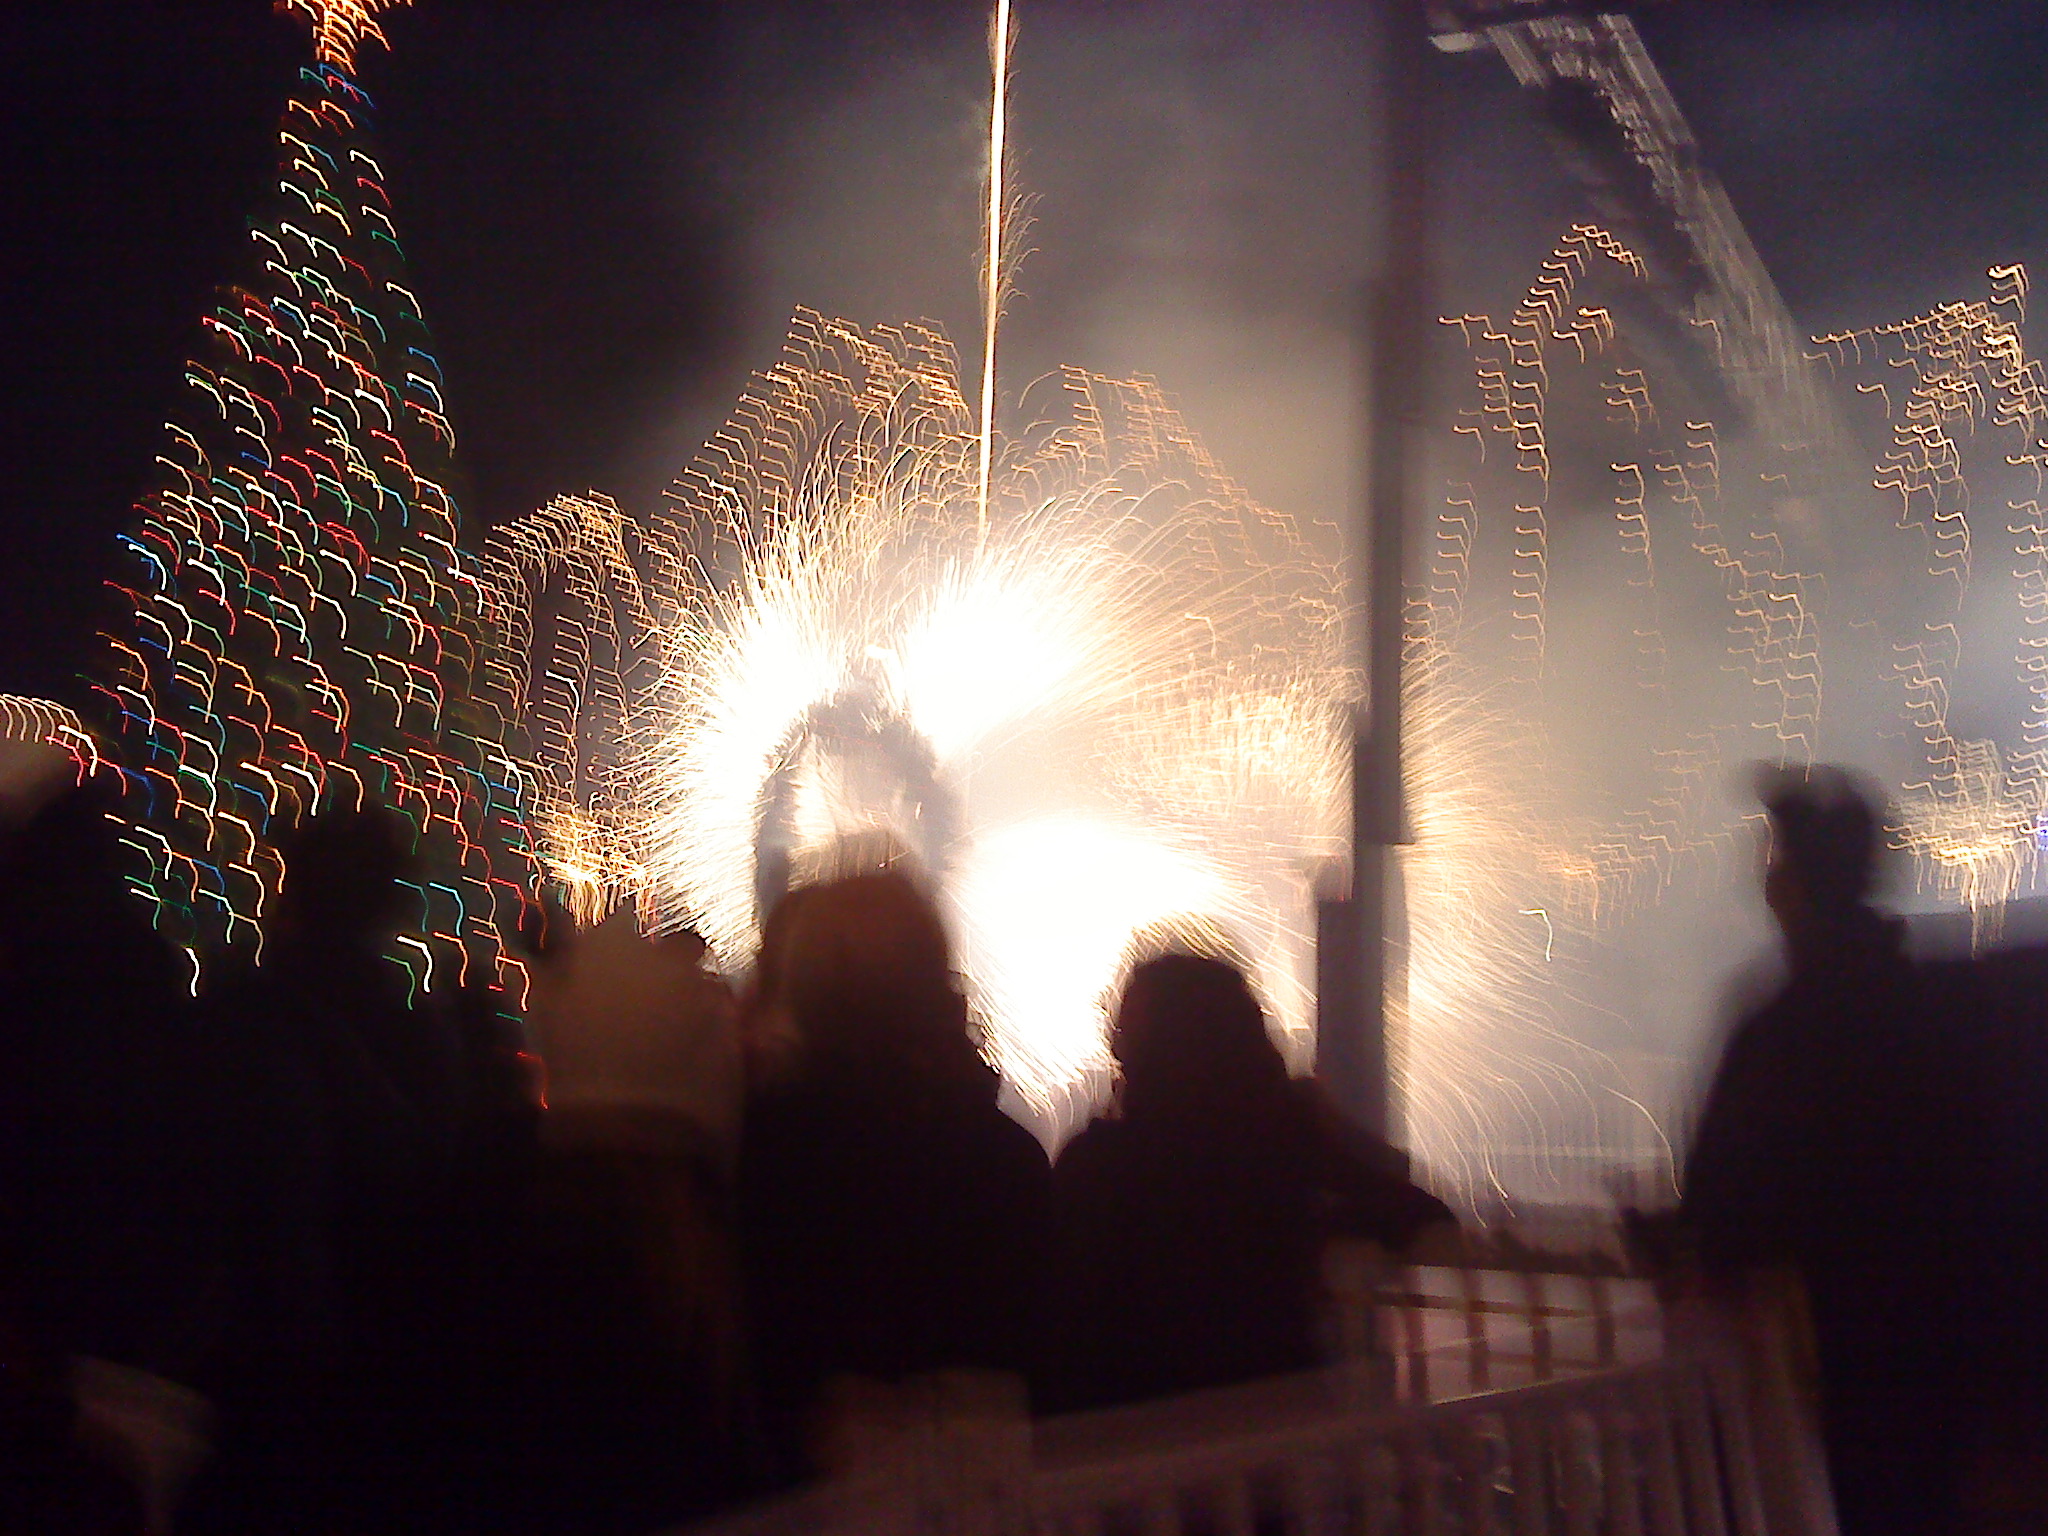 20. Fireworks